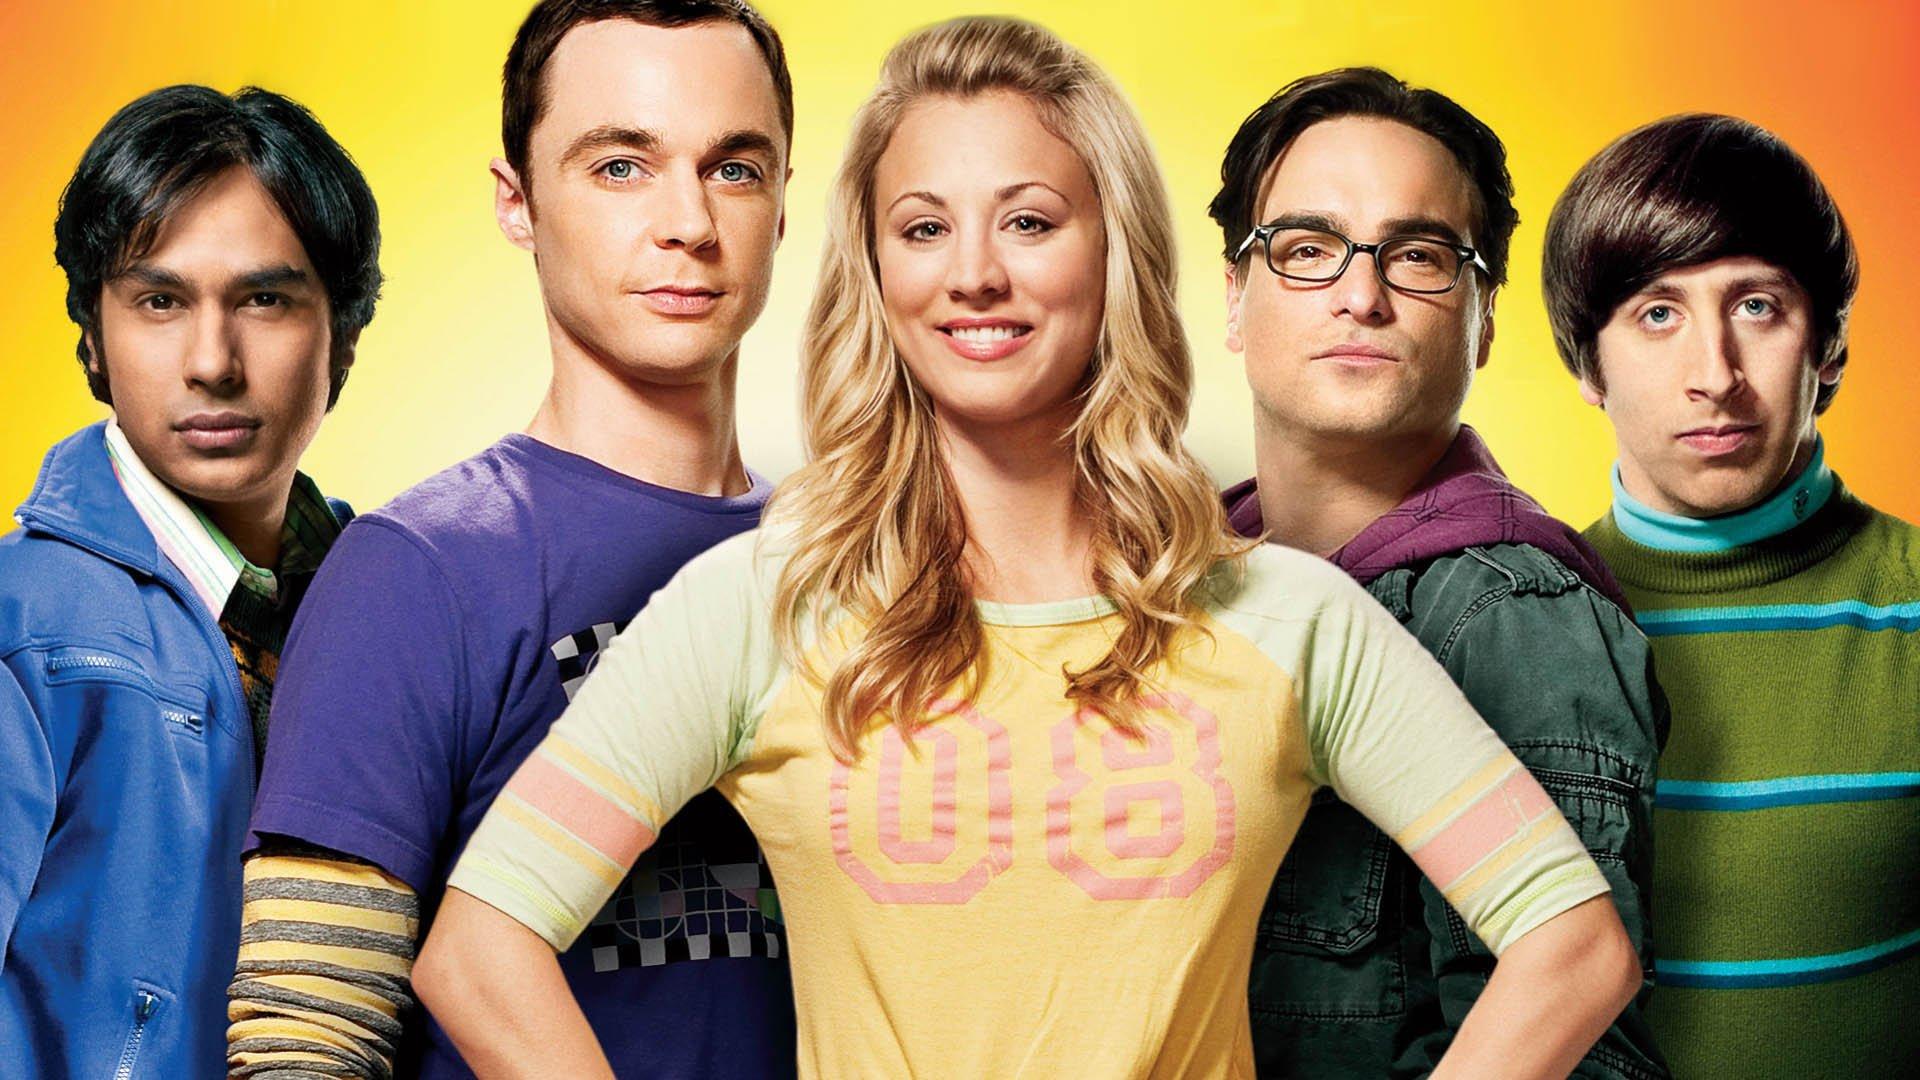 Kunal Nayyar Has The Saddest News For Fans Of 'The Big Bang Theory' Show